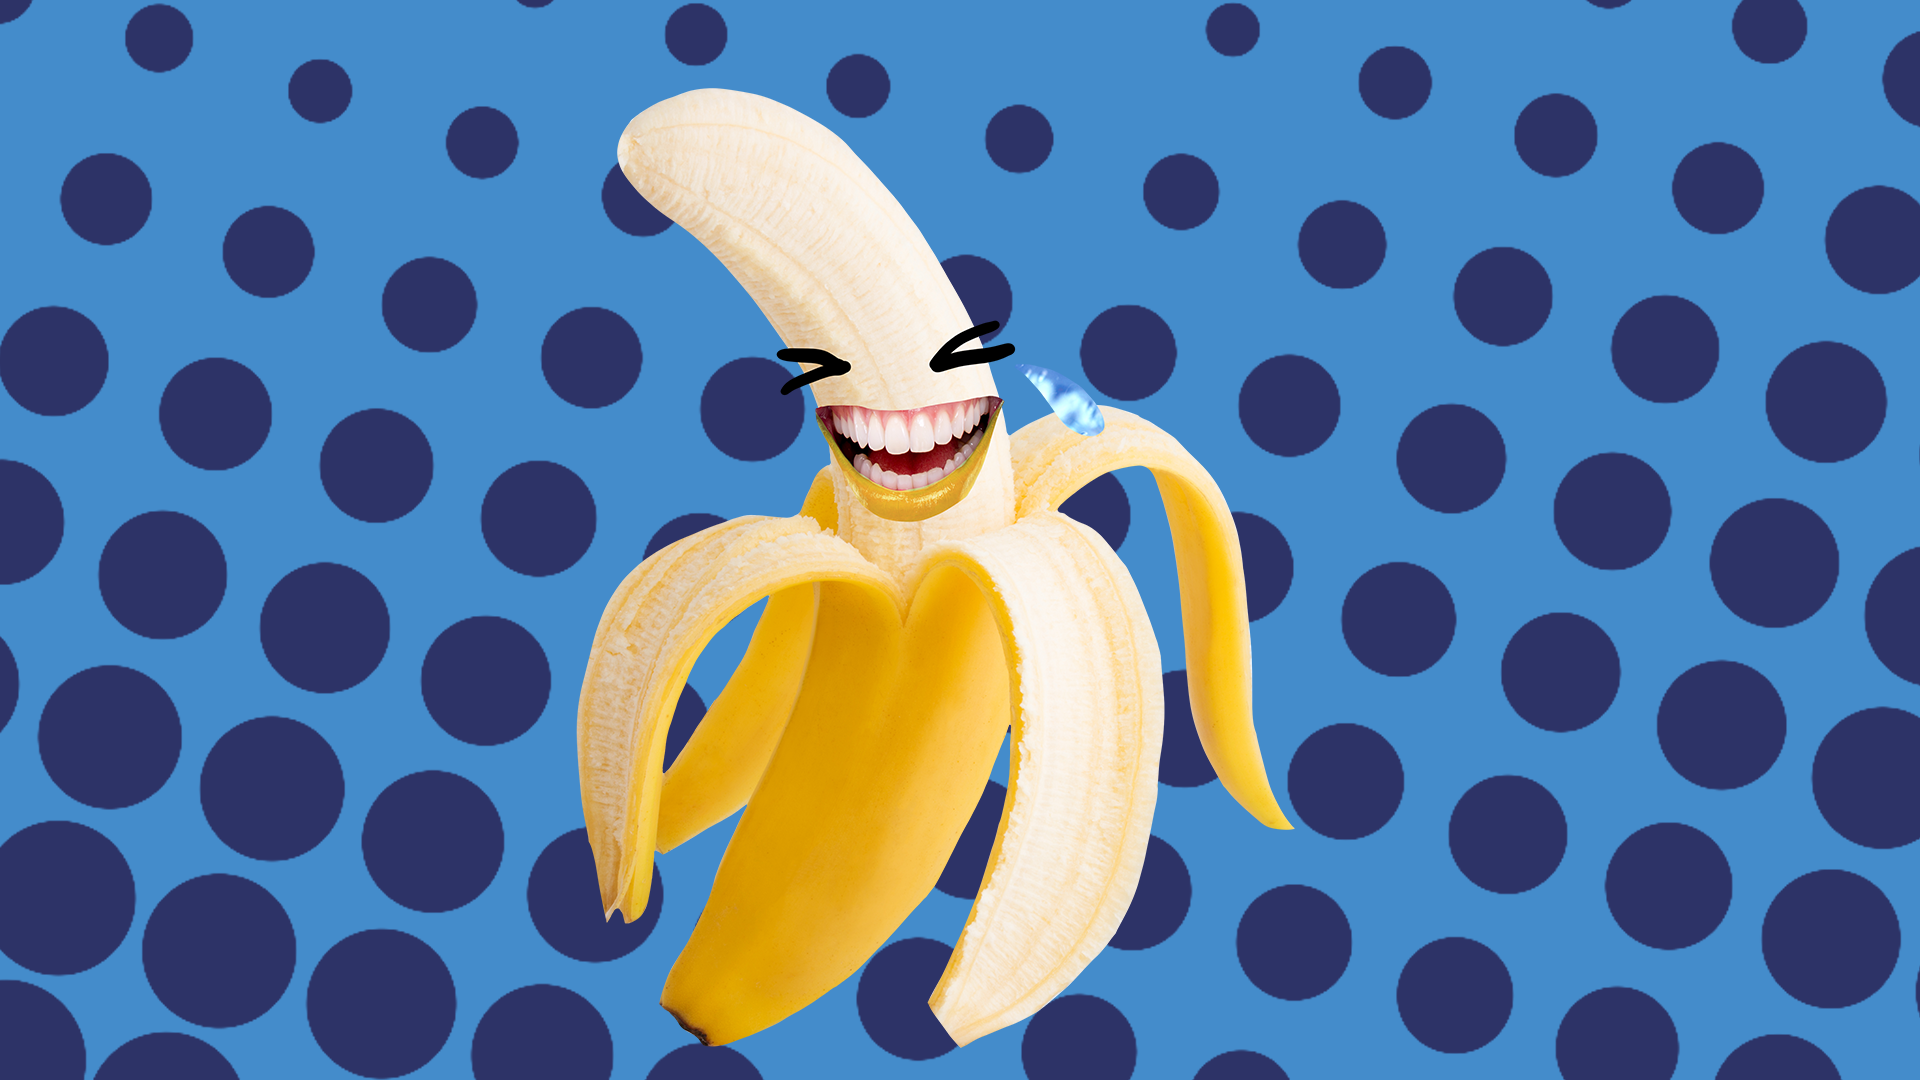 Laughing banana